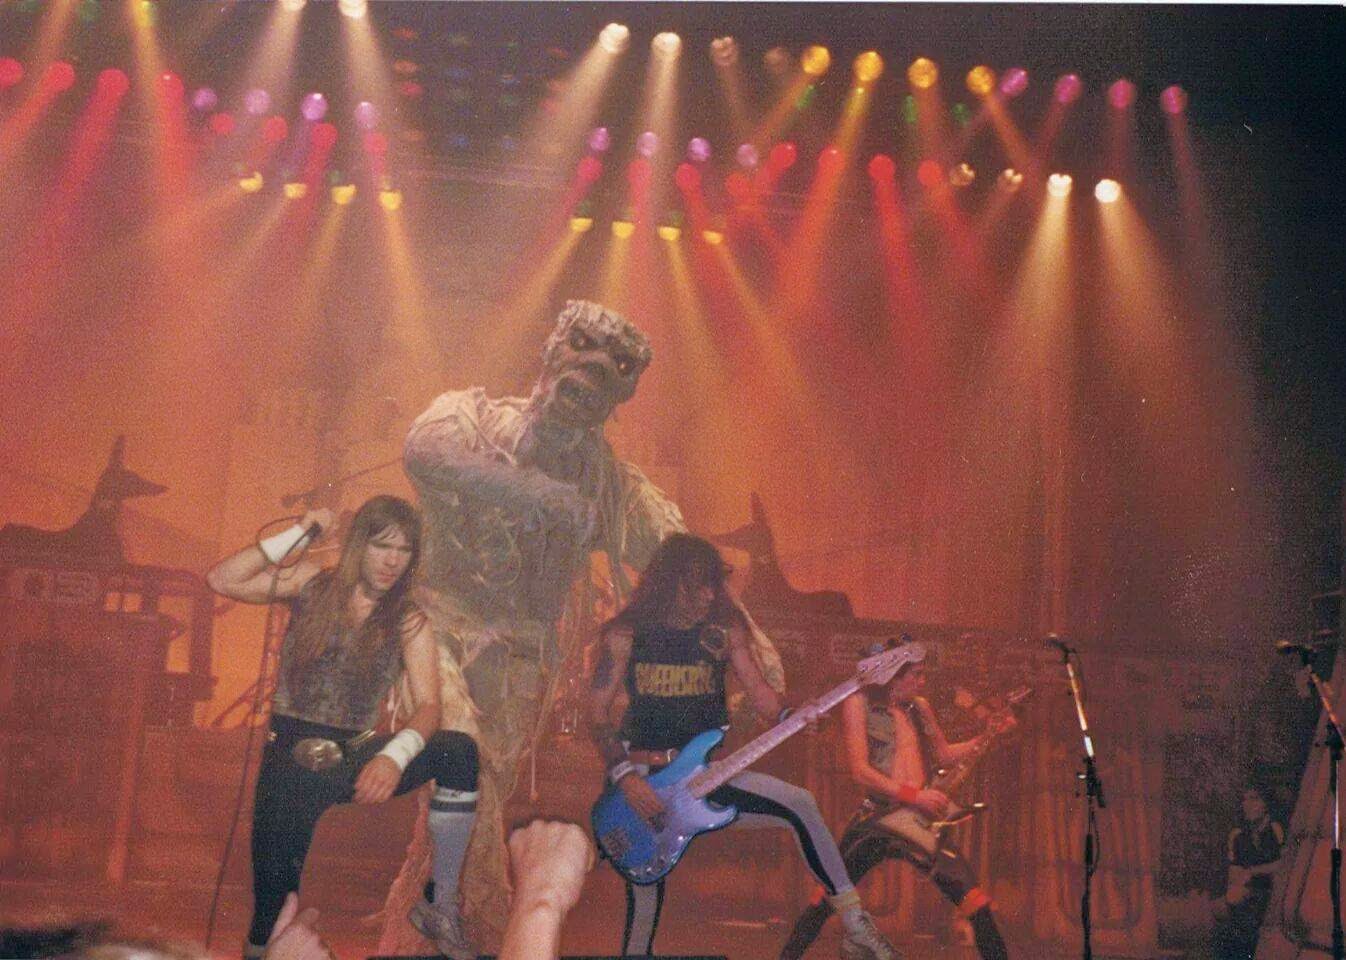 World Slavery Tour - Iron Maiden - Eddie